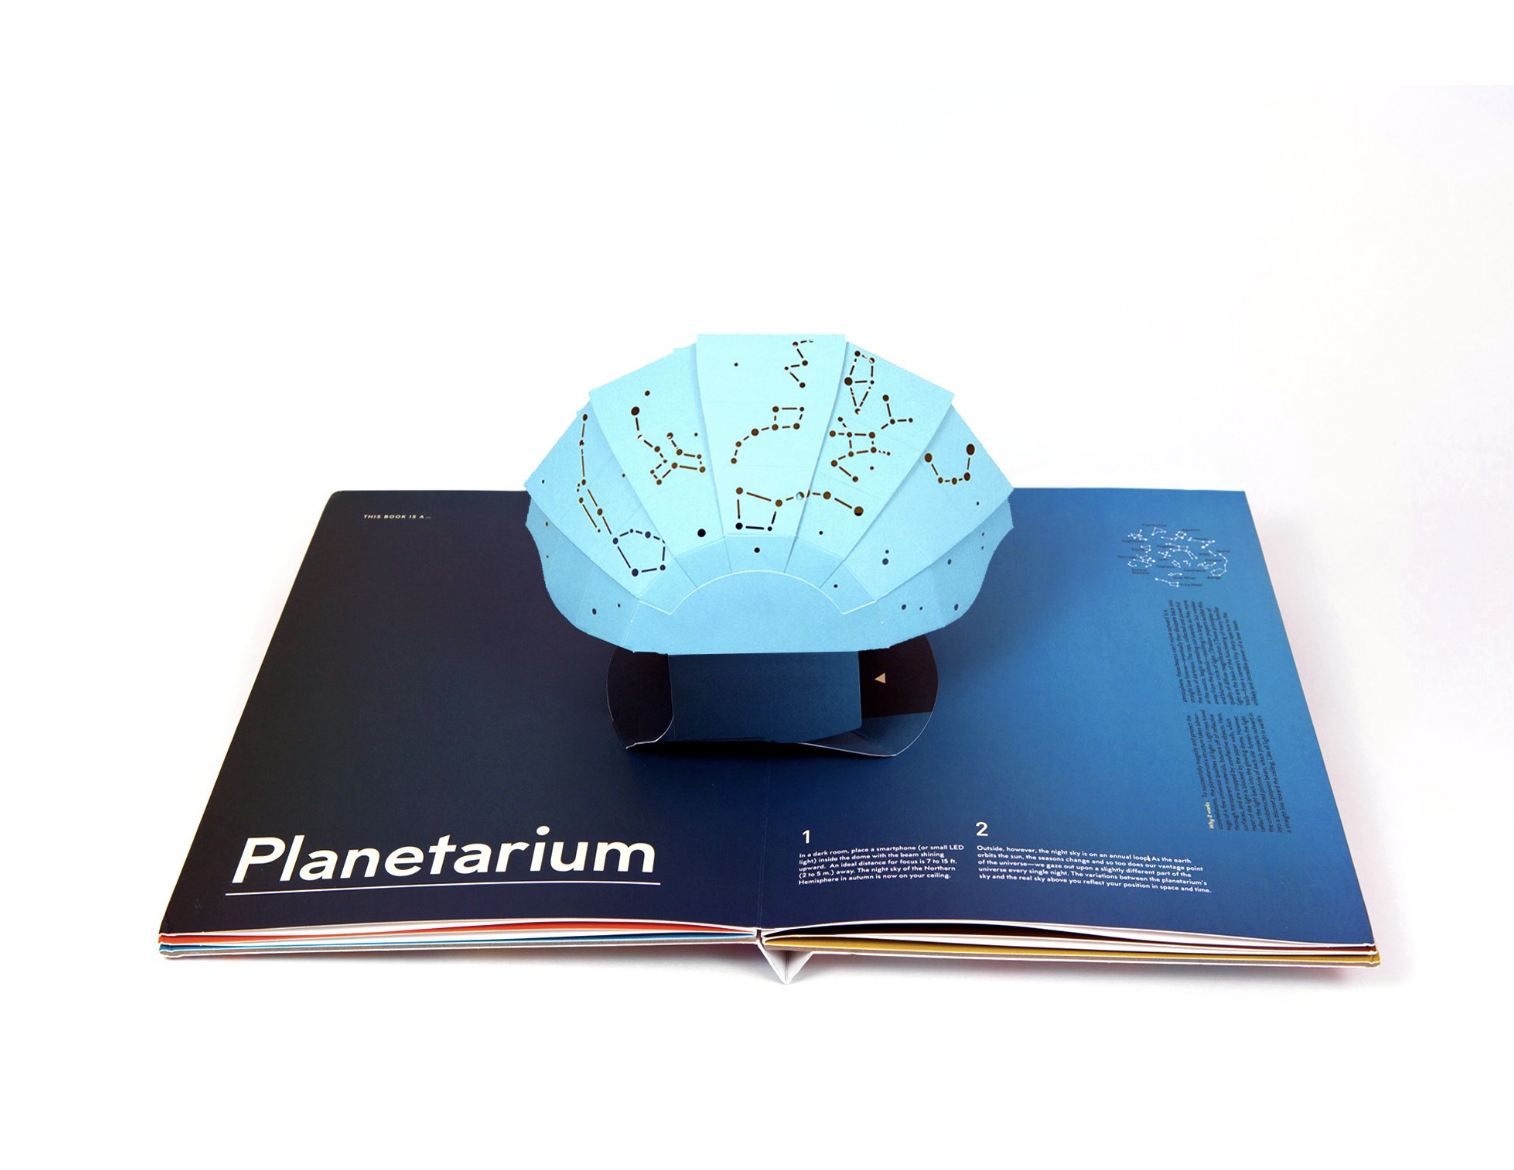 interactive books this book is a planetarium